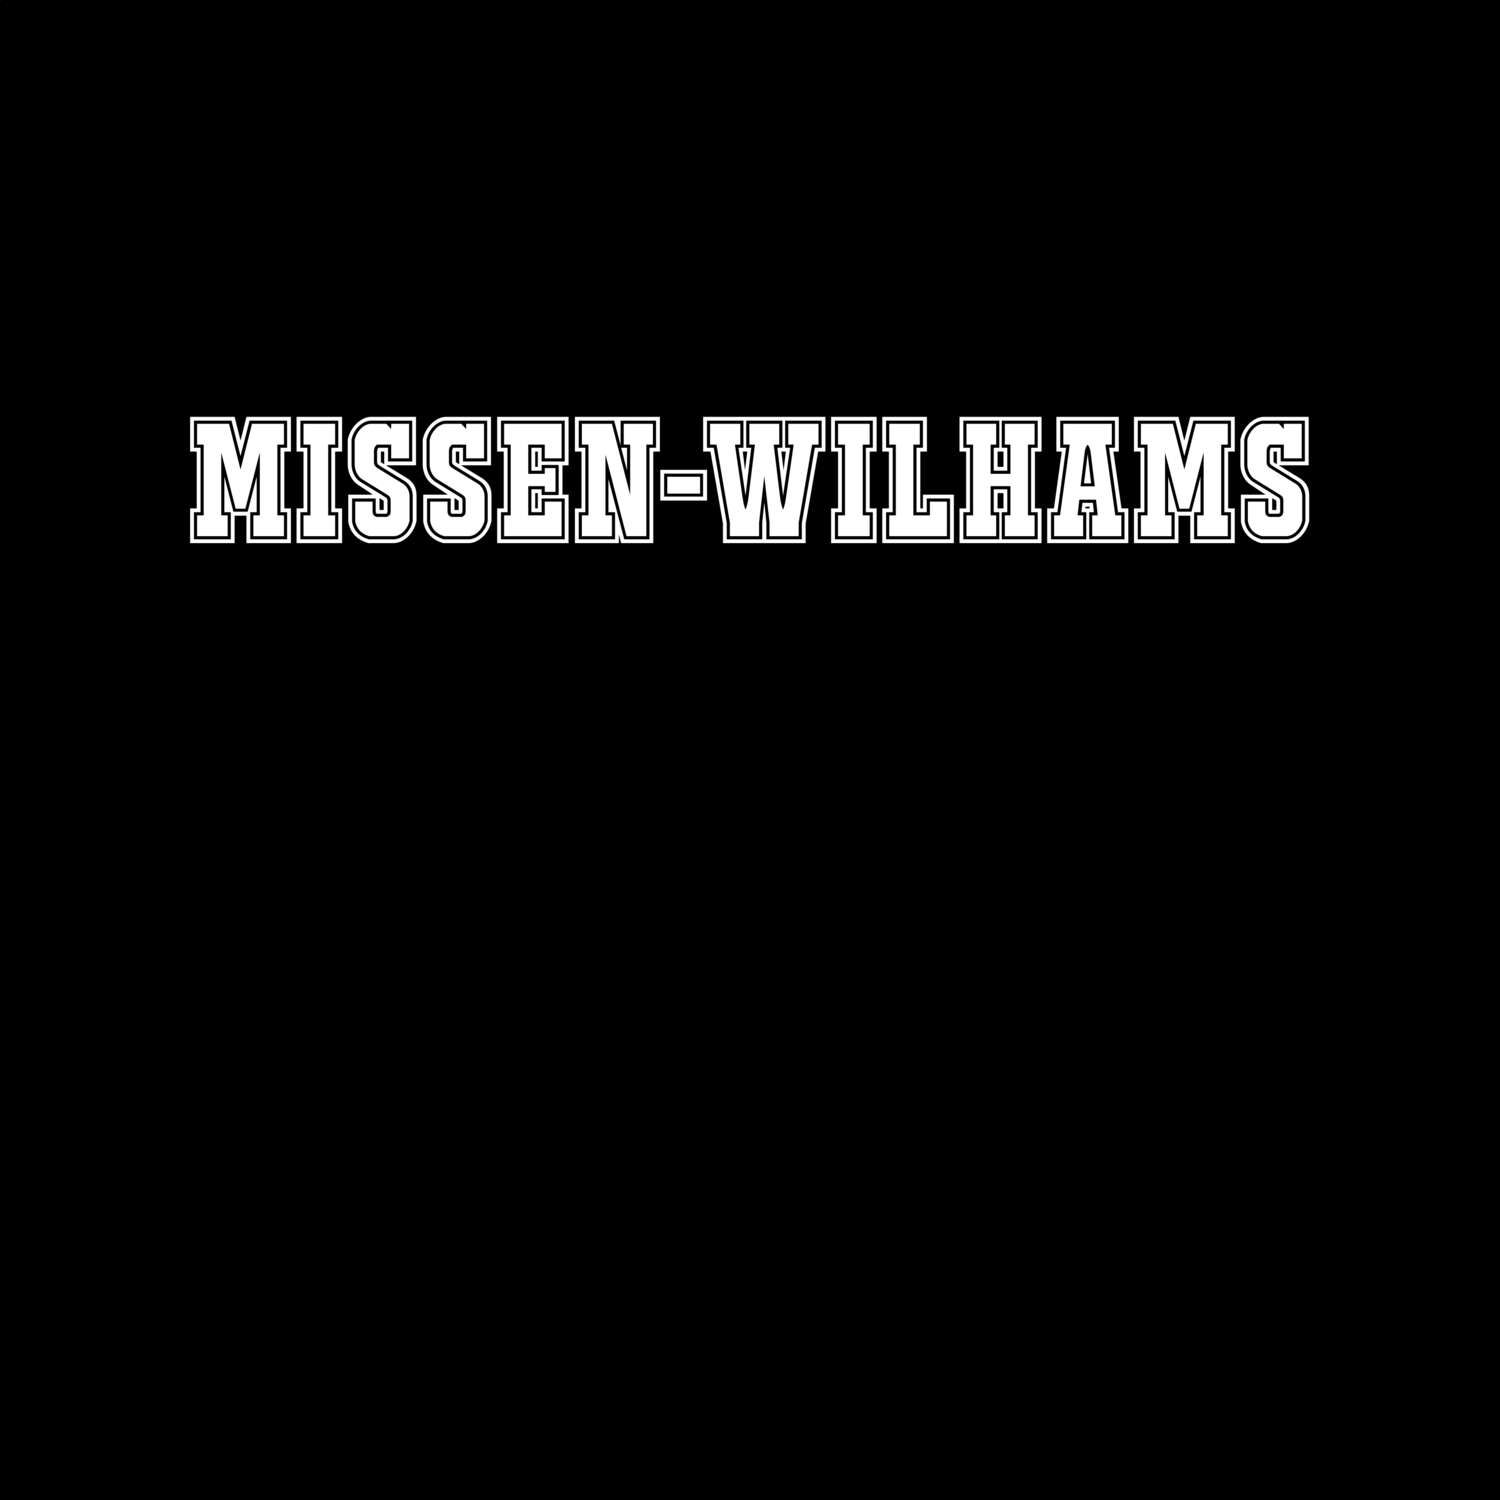 Missen-Wilhams T-Shirt »Classic«